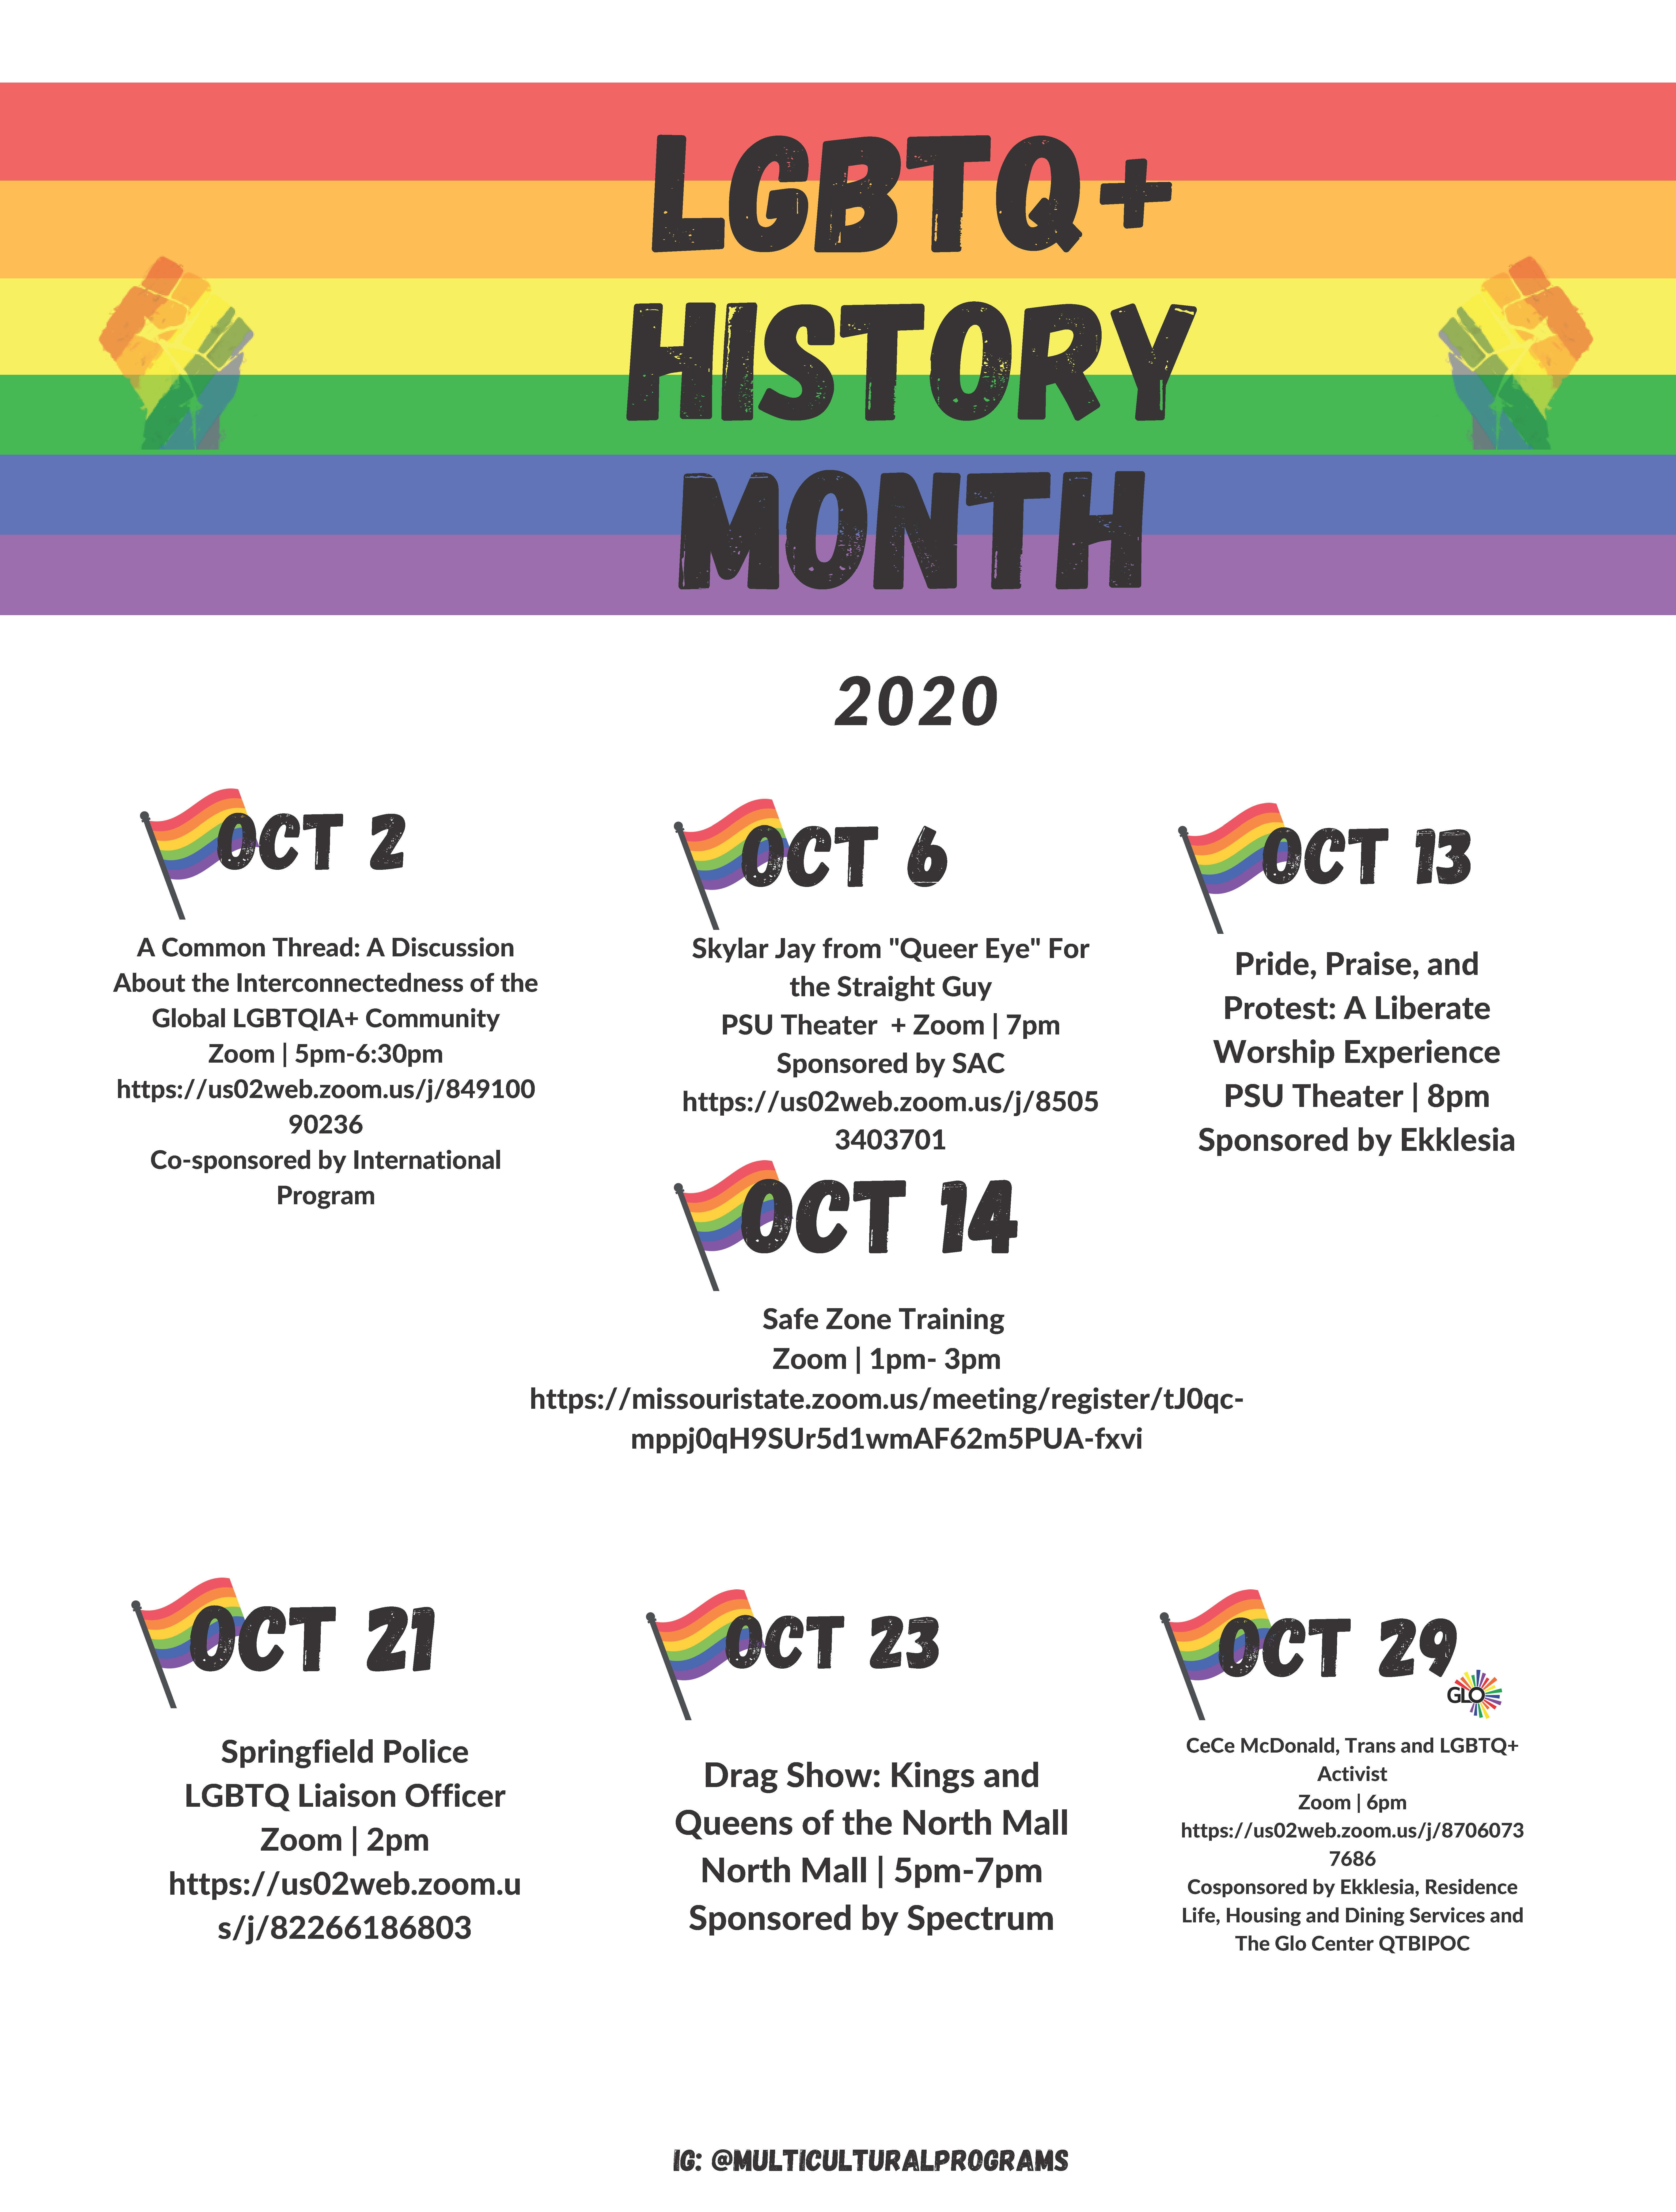 LGBTQ+ History Month Calendar of Events